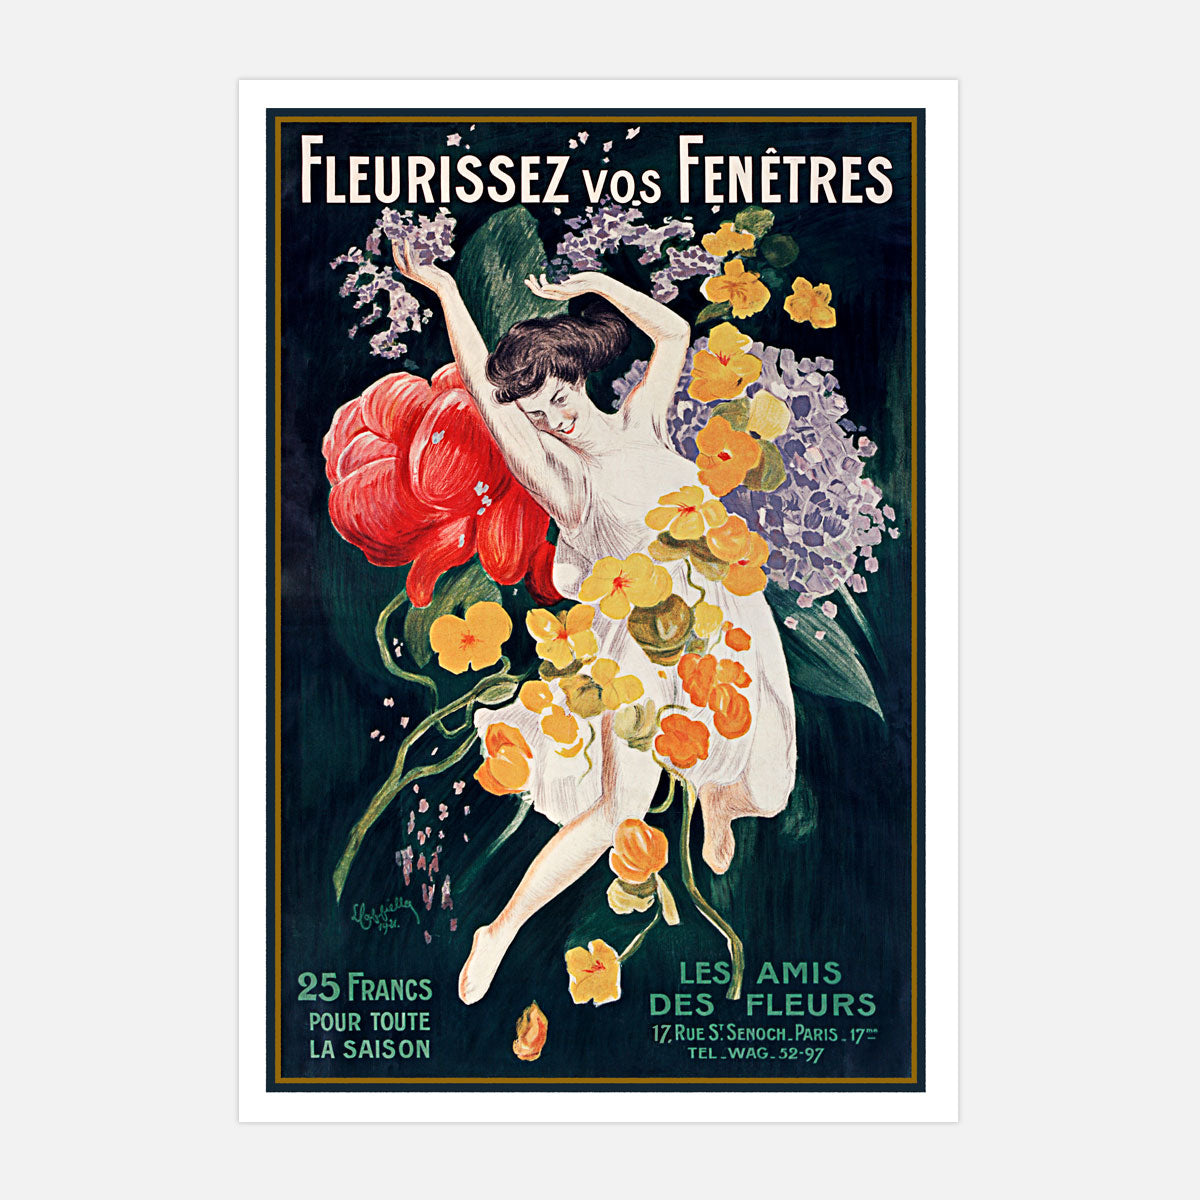 Les Amis Des Fleurs retro vintage advertising poster from Places We Luv